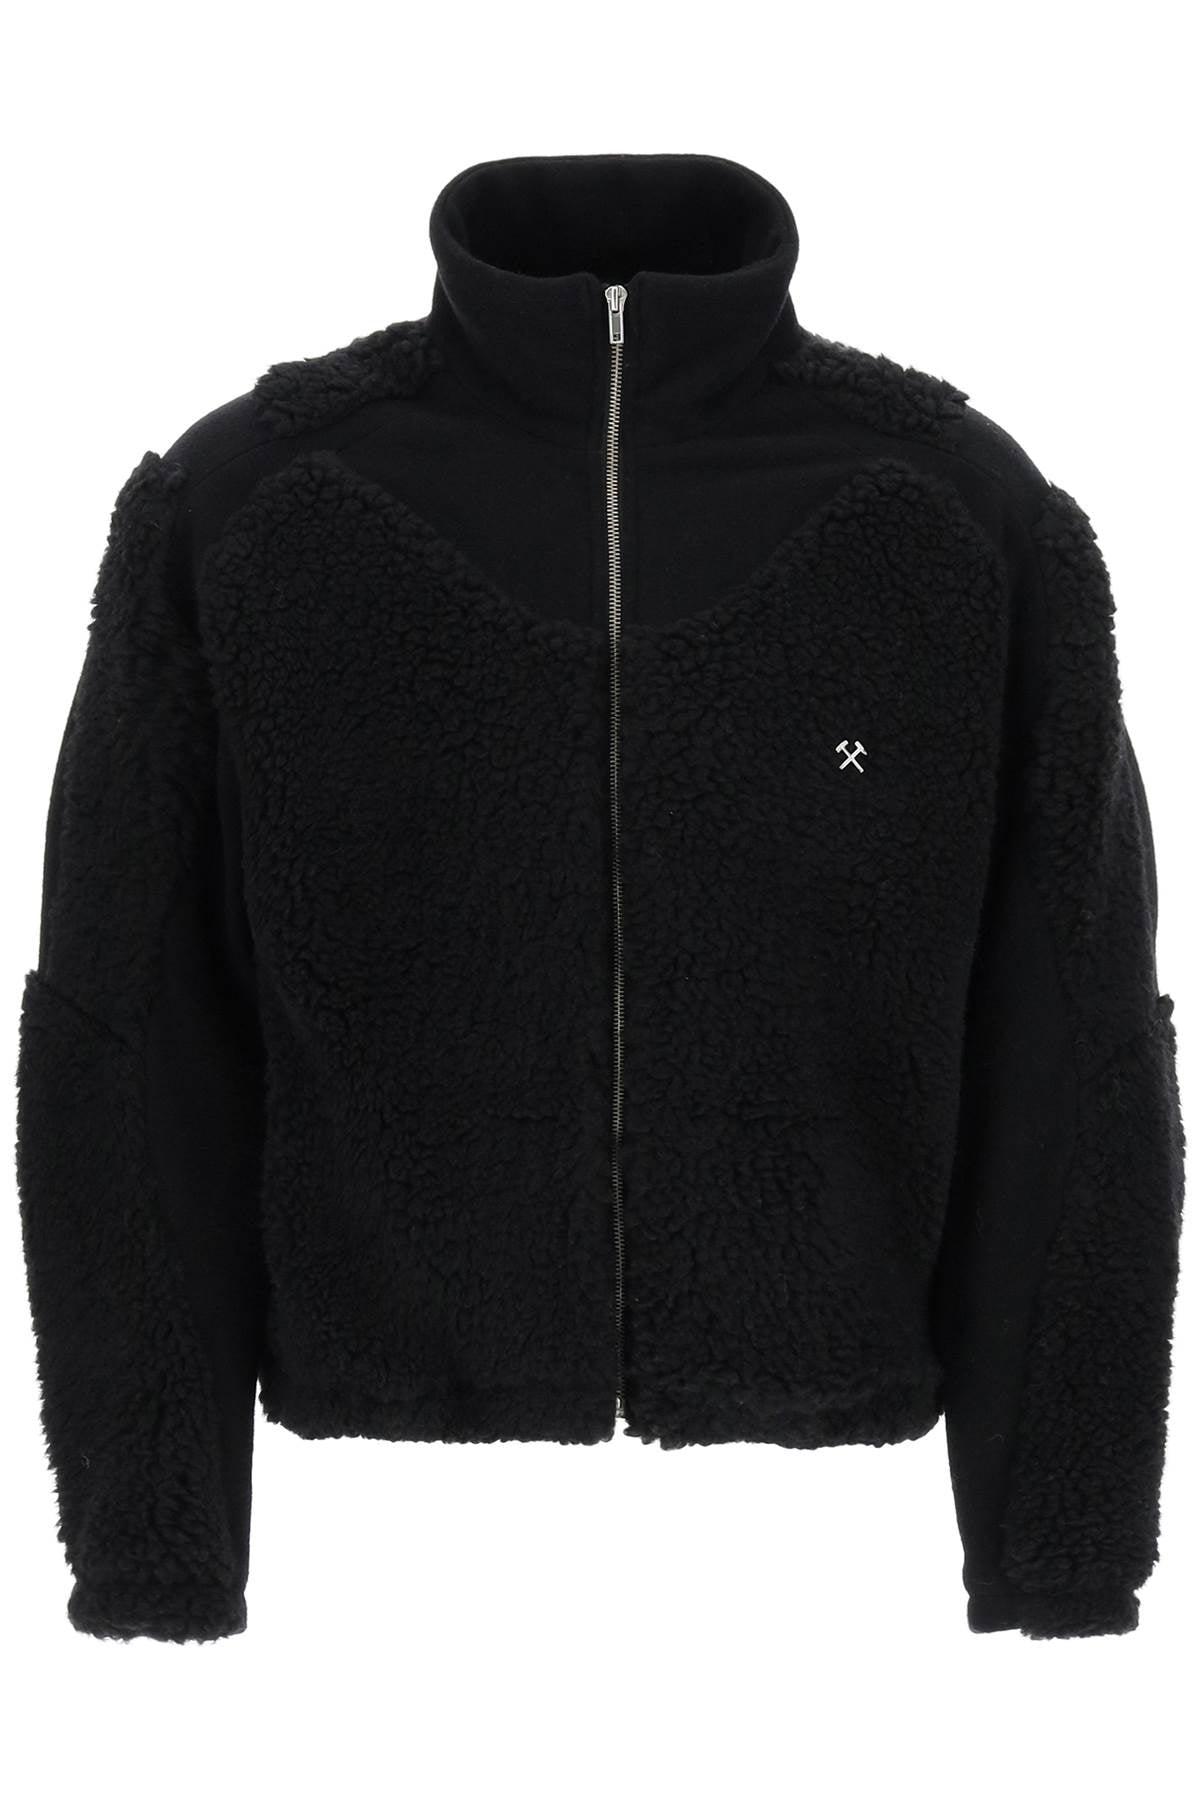 GmbH 'ercan' Fleece And Teddy Jacket in Black for Men | Lyst